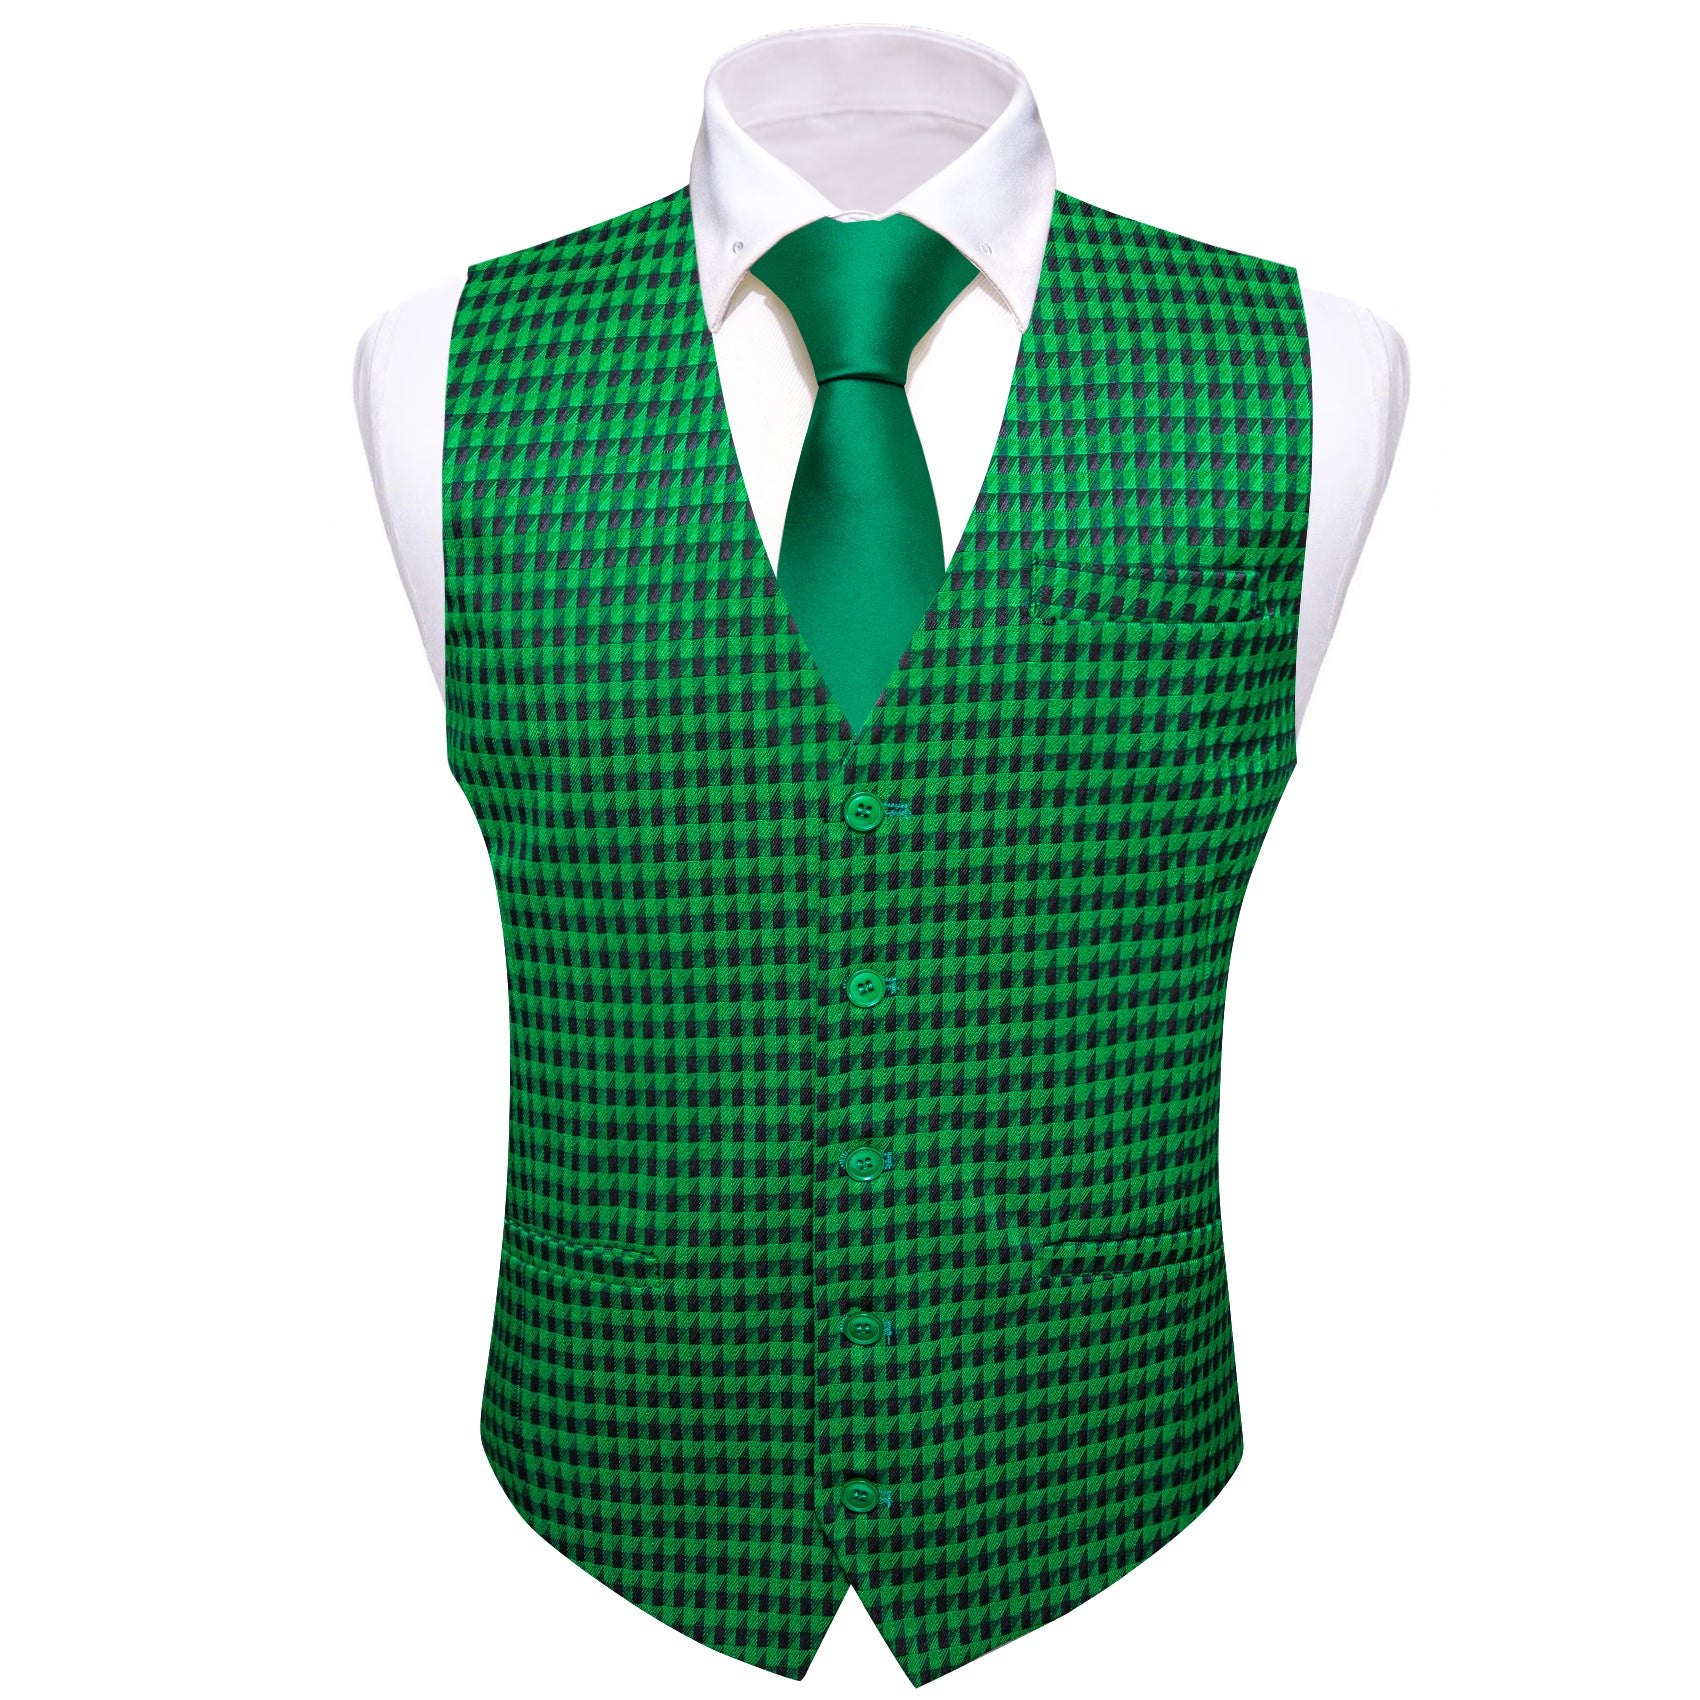 Barry.wang Mens Novetly Green Waistcoat Vest